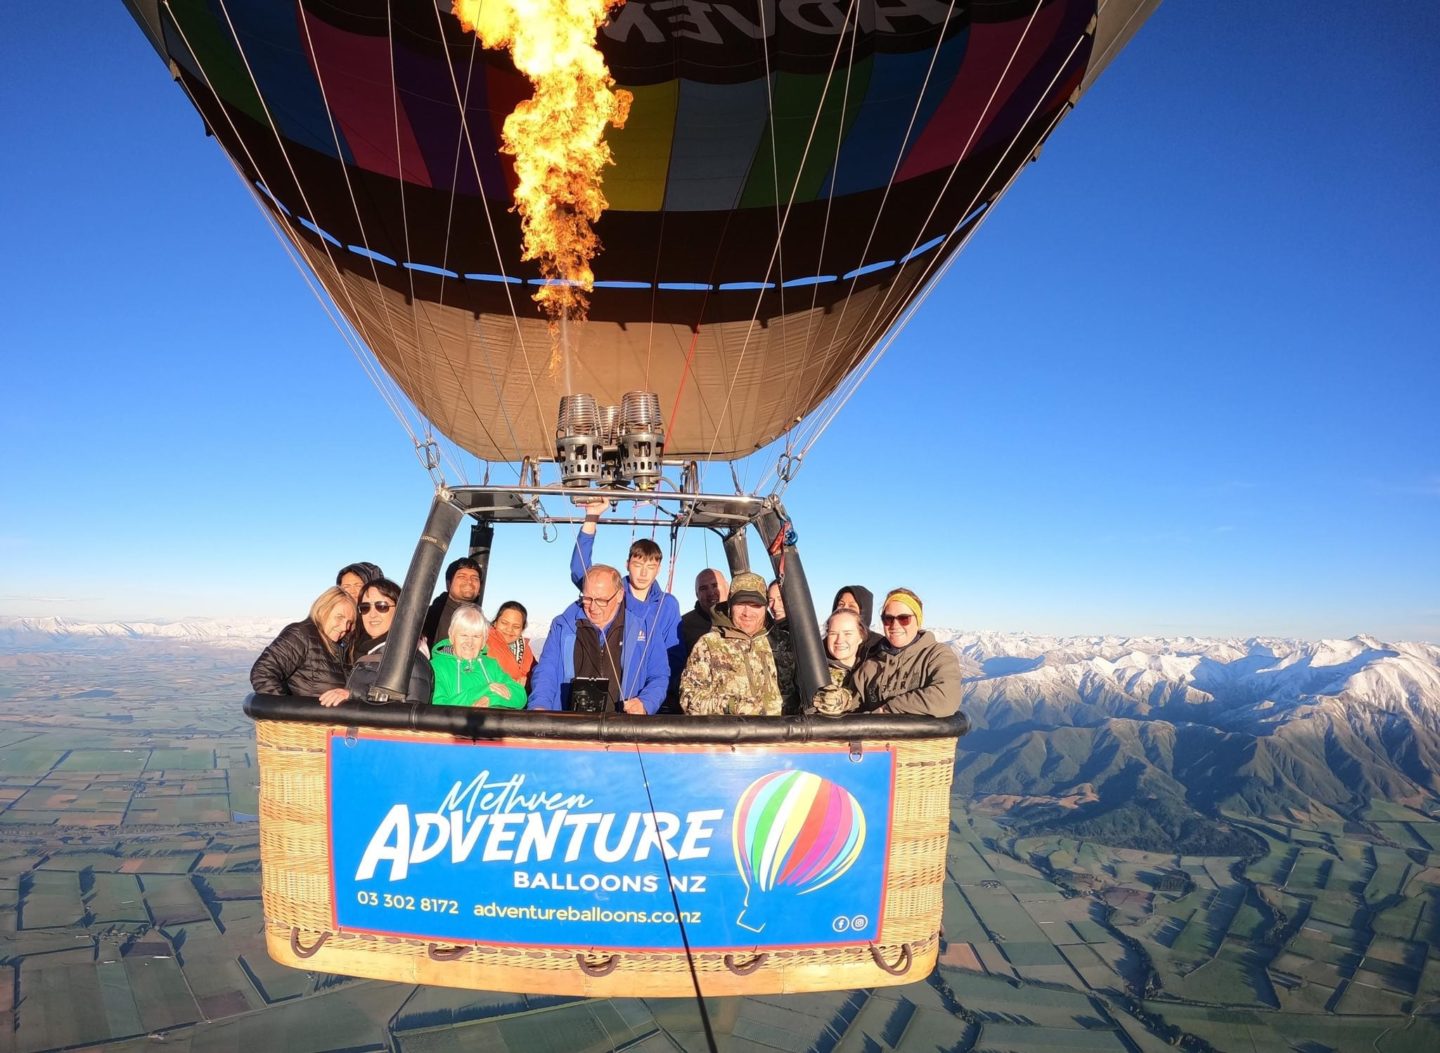 Full Adventure Balloons NZ Hot air balloon over canterbury